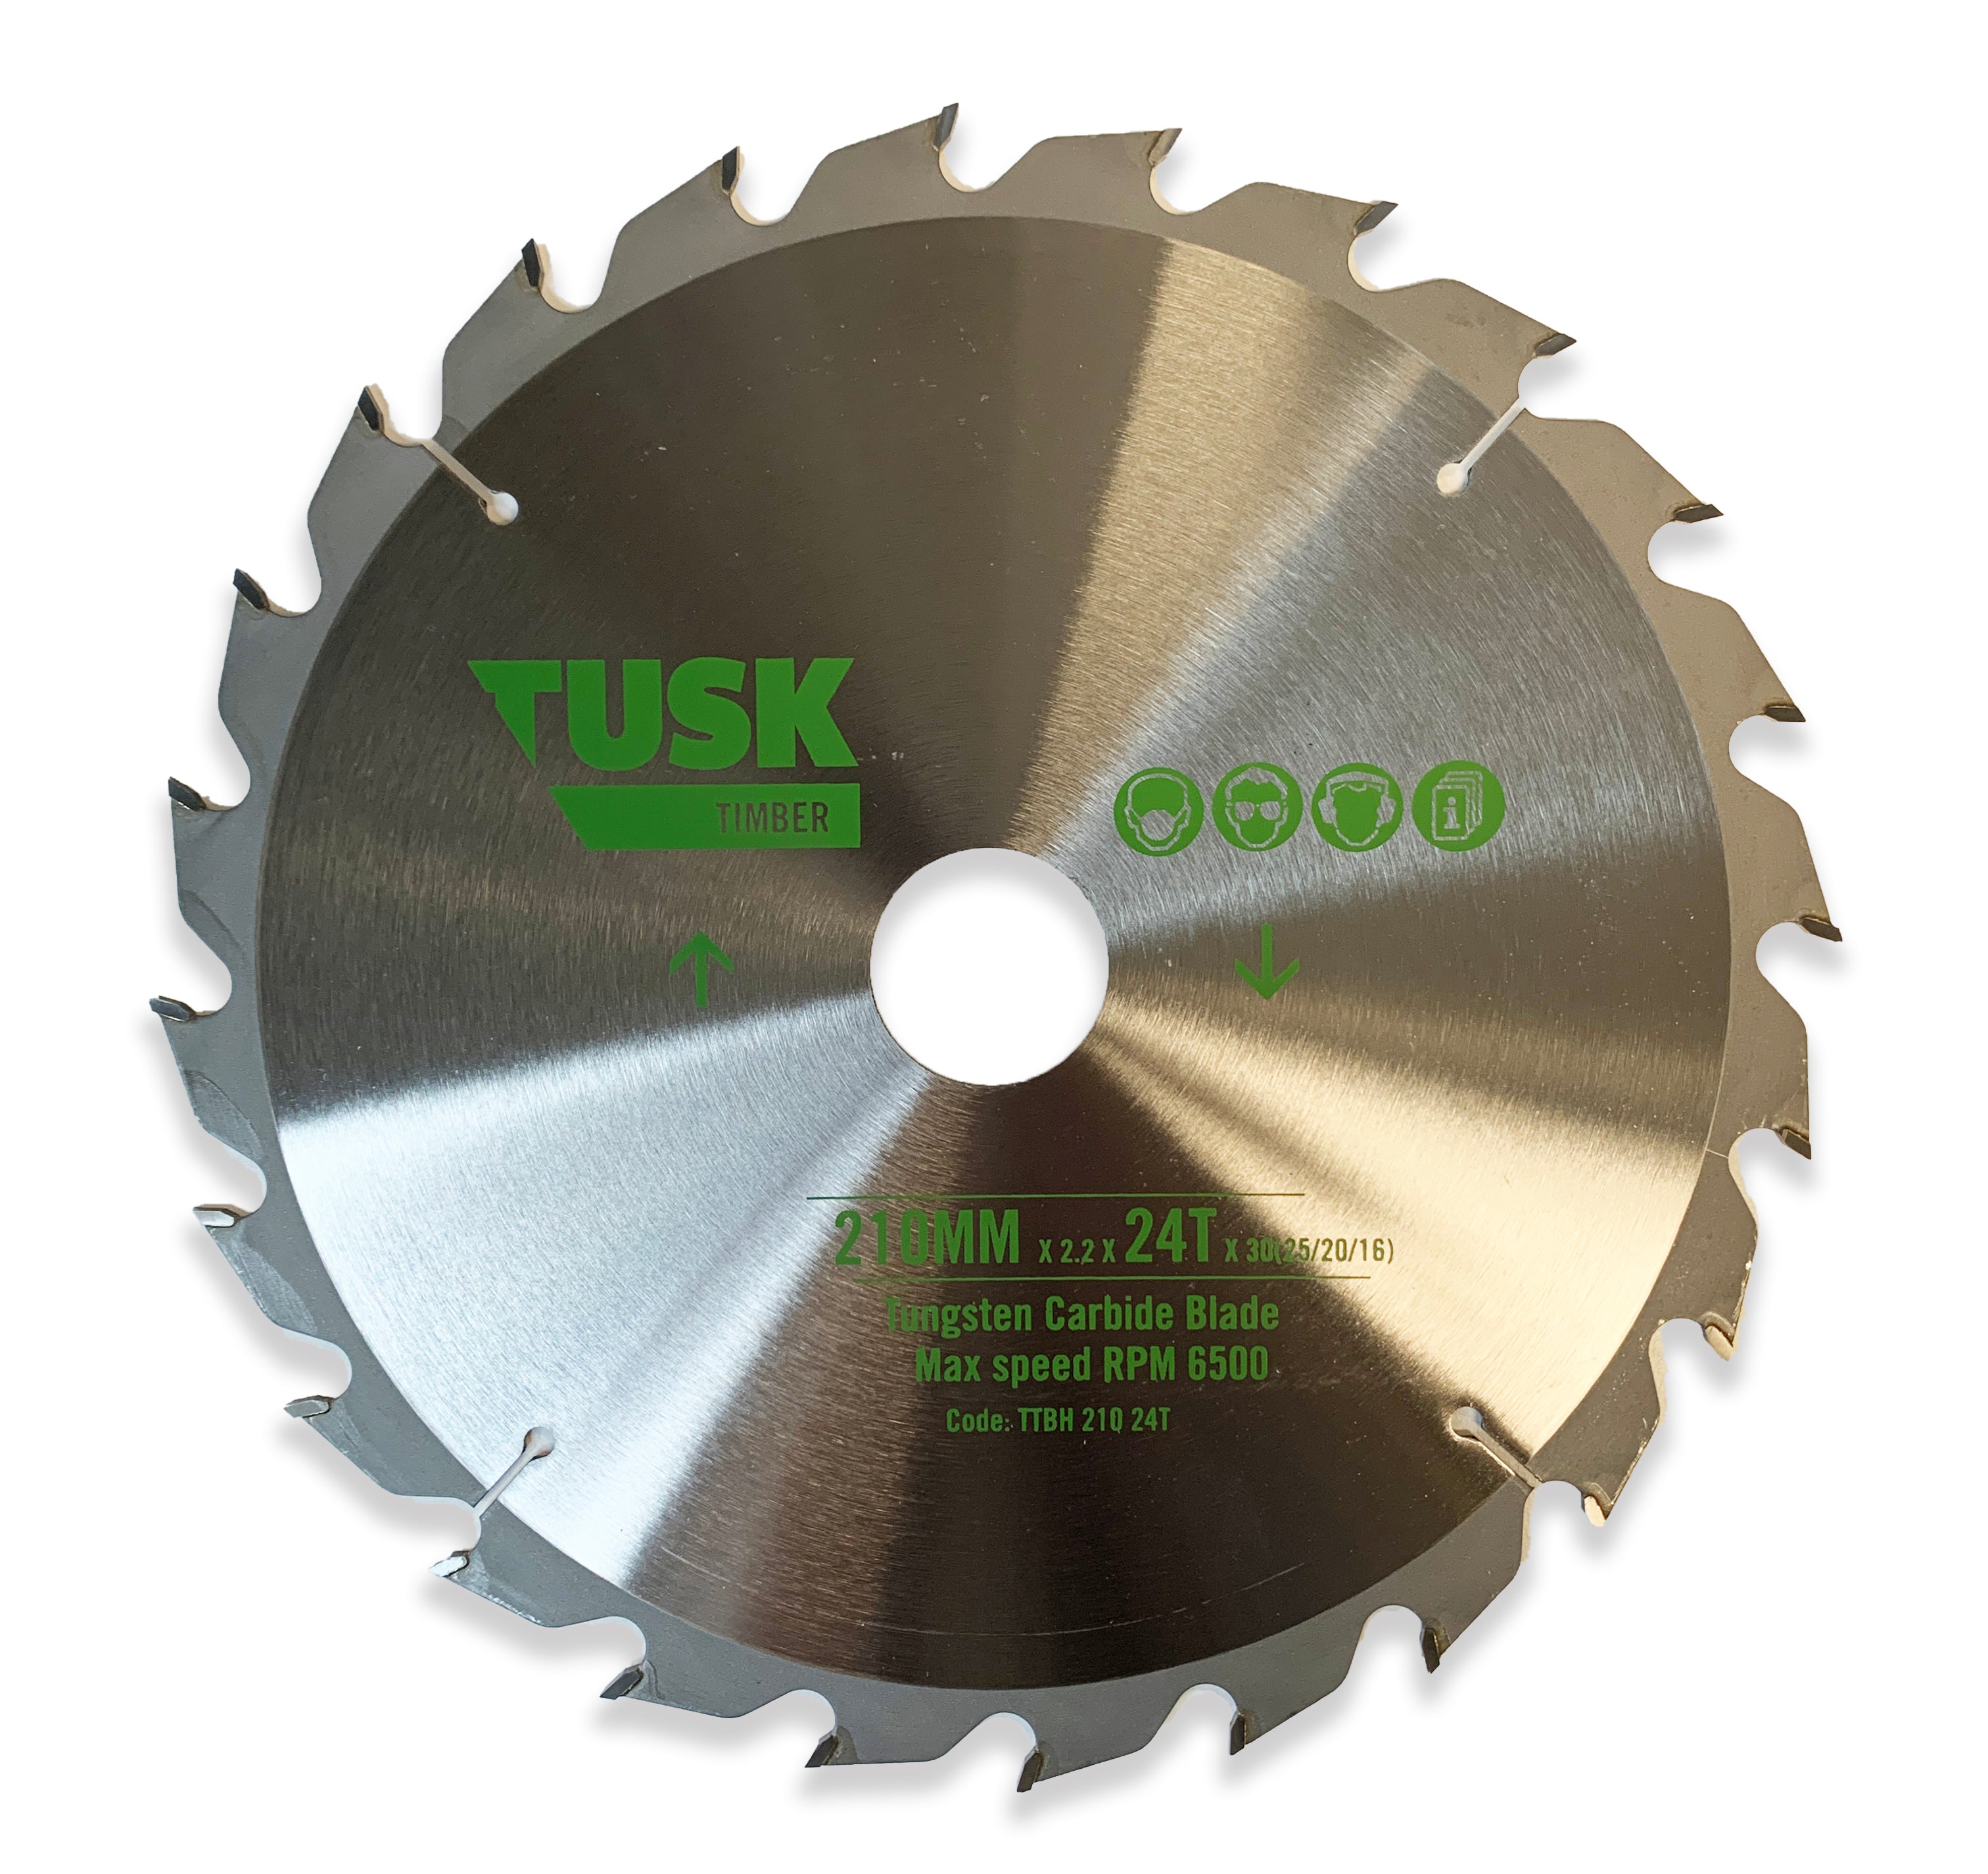 Tusk Timber Tungsten Carbide Blades - 210 X 2.2/1.4 X 24T X 30 (25/20/16)